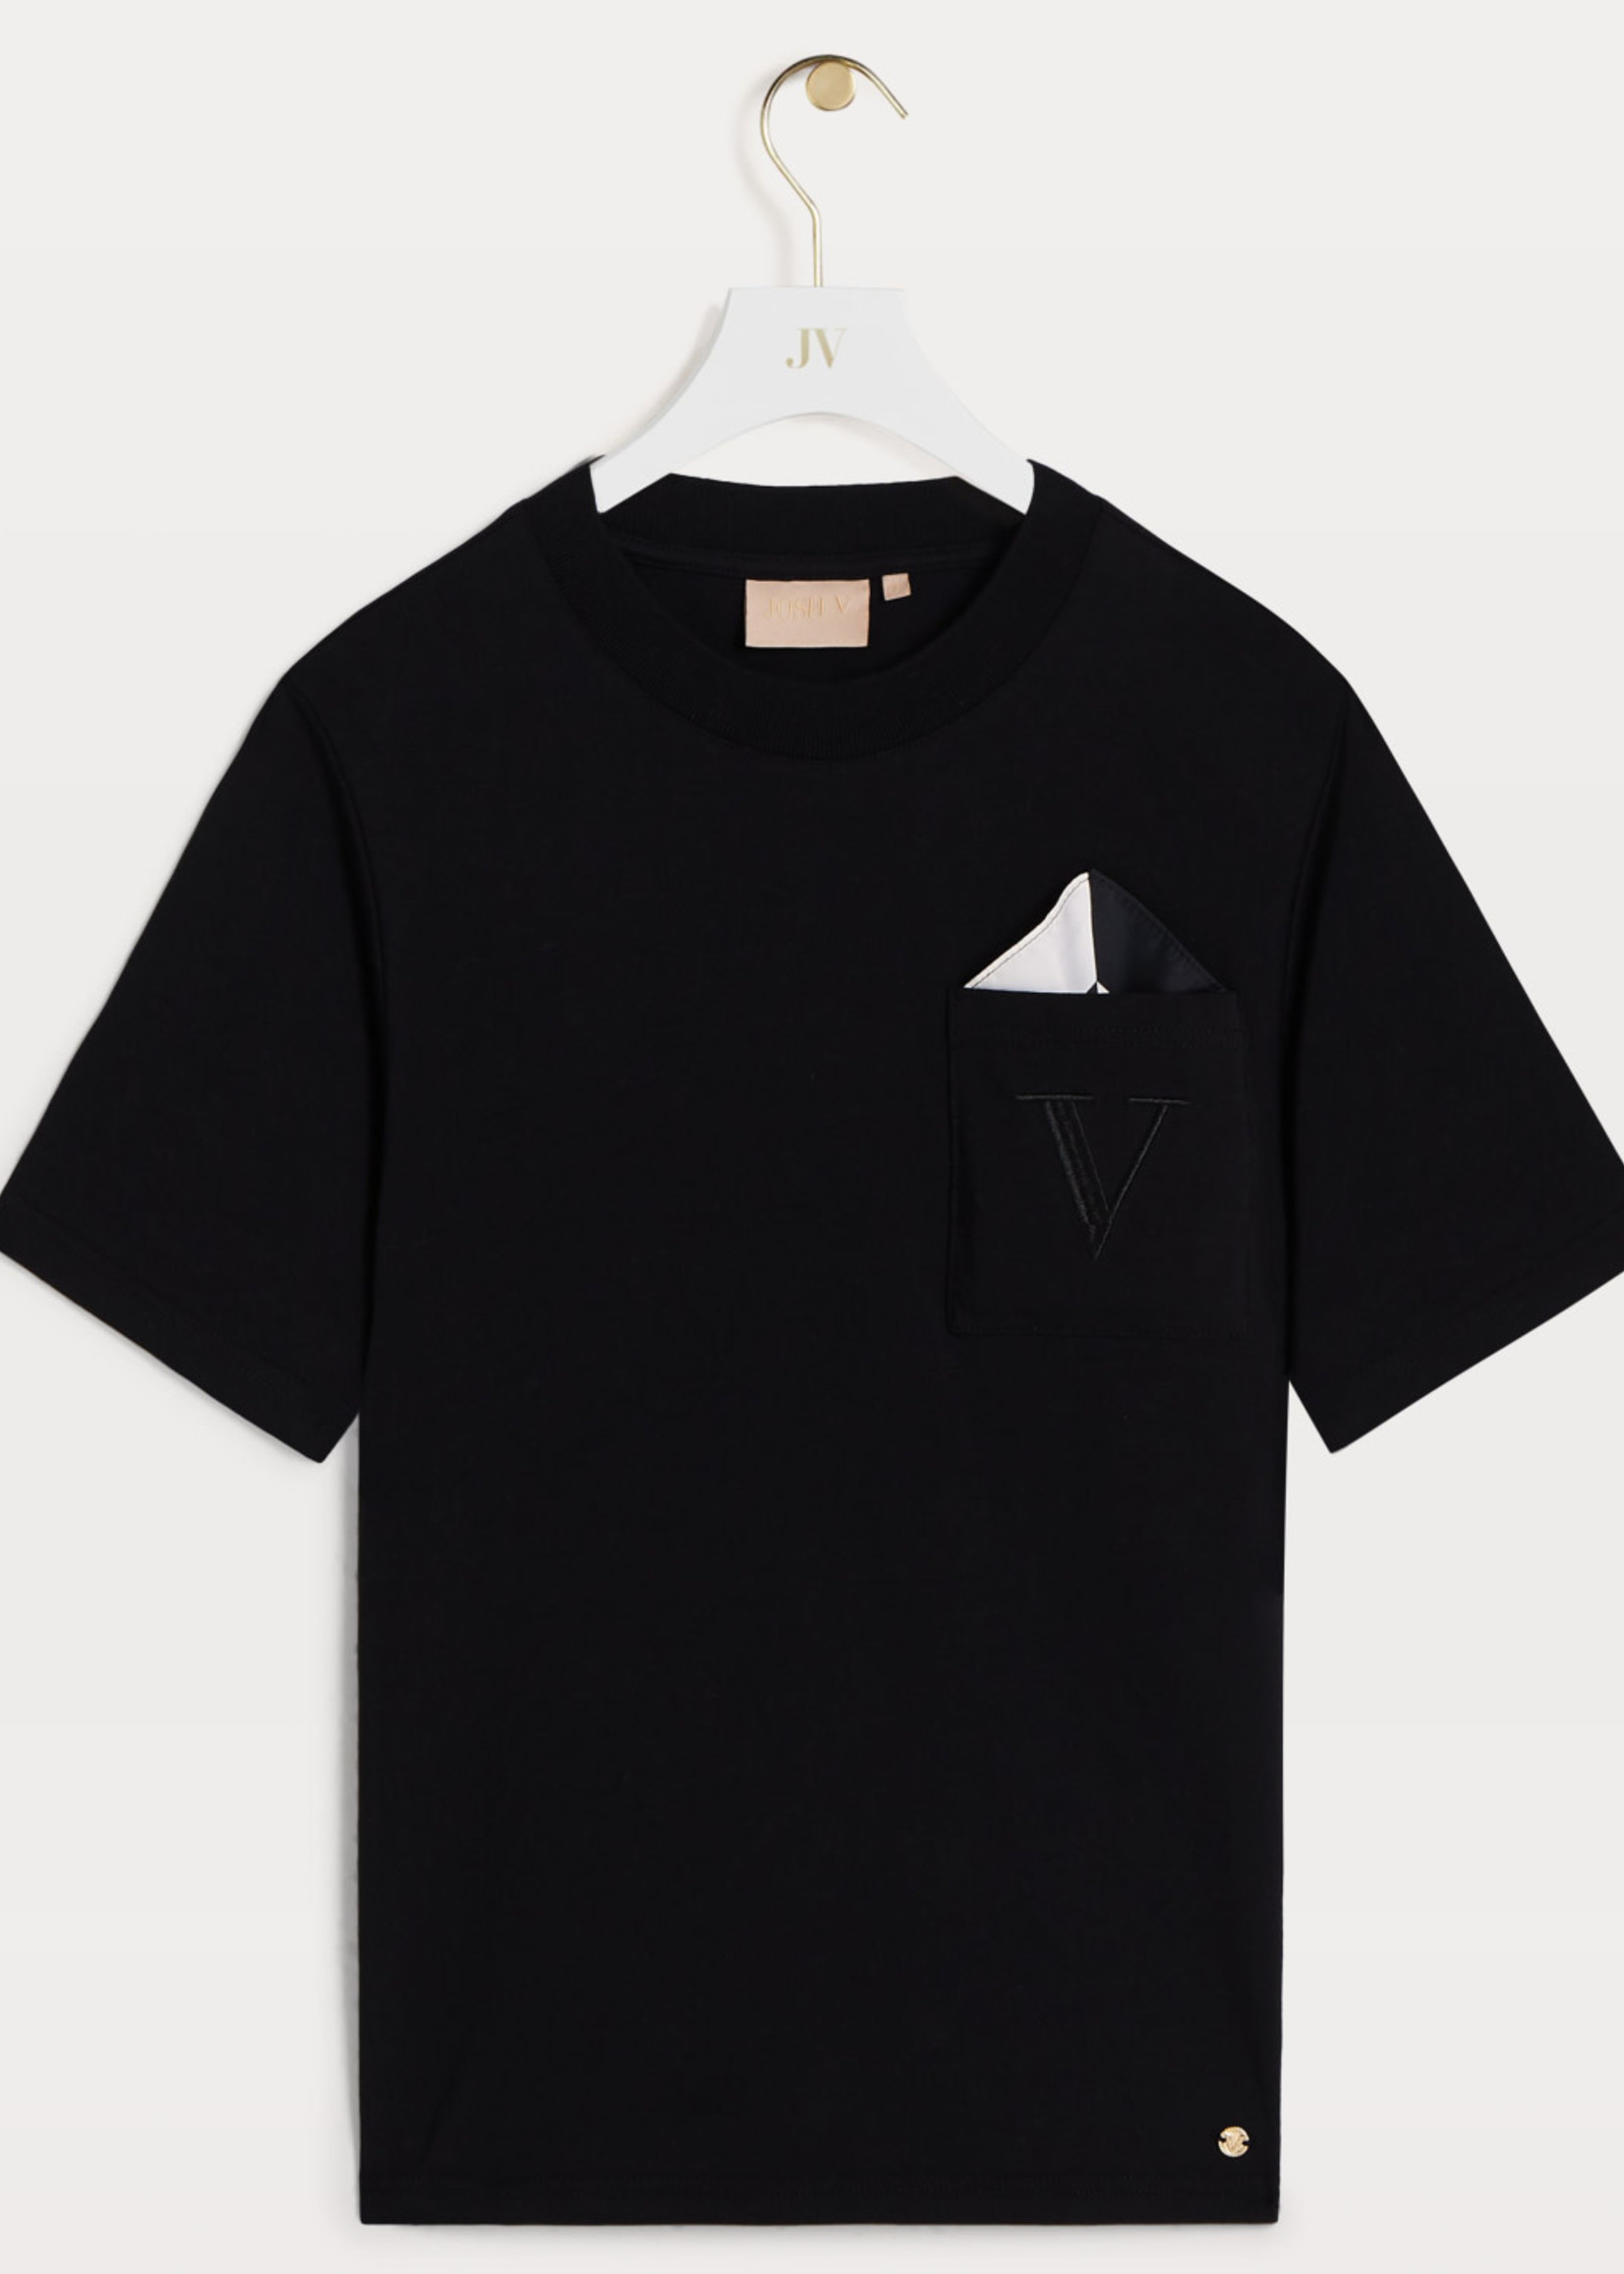 Josh V Josh V - Dorie Pocket - T-Shirt - Black